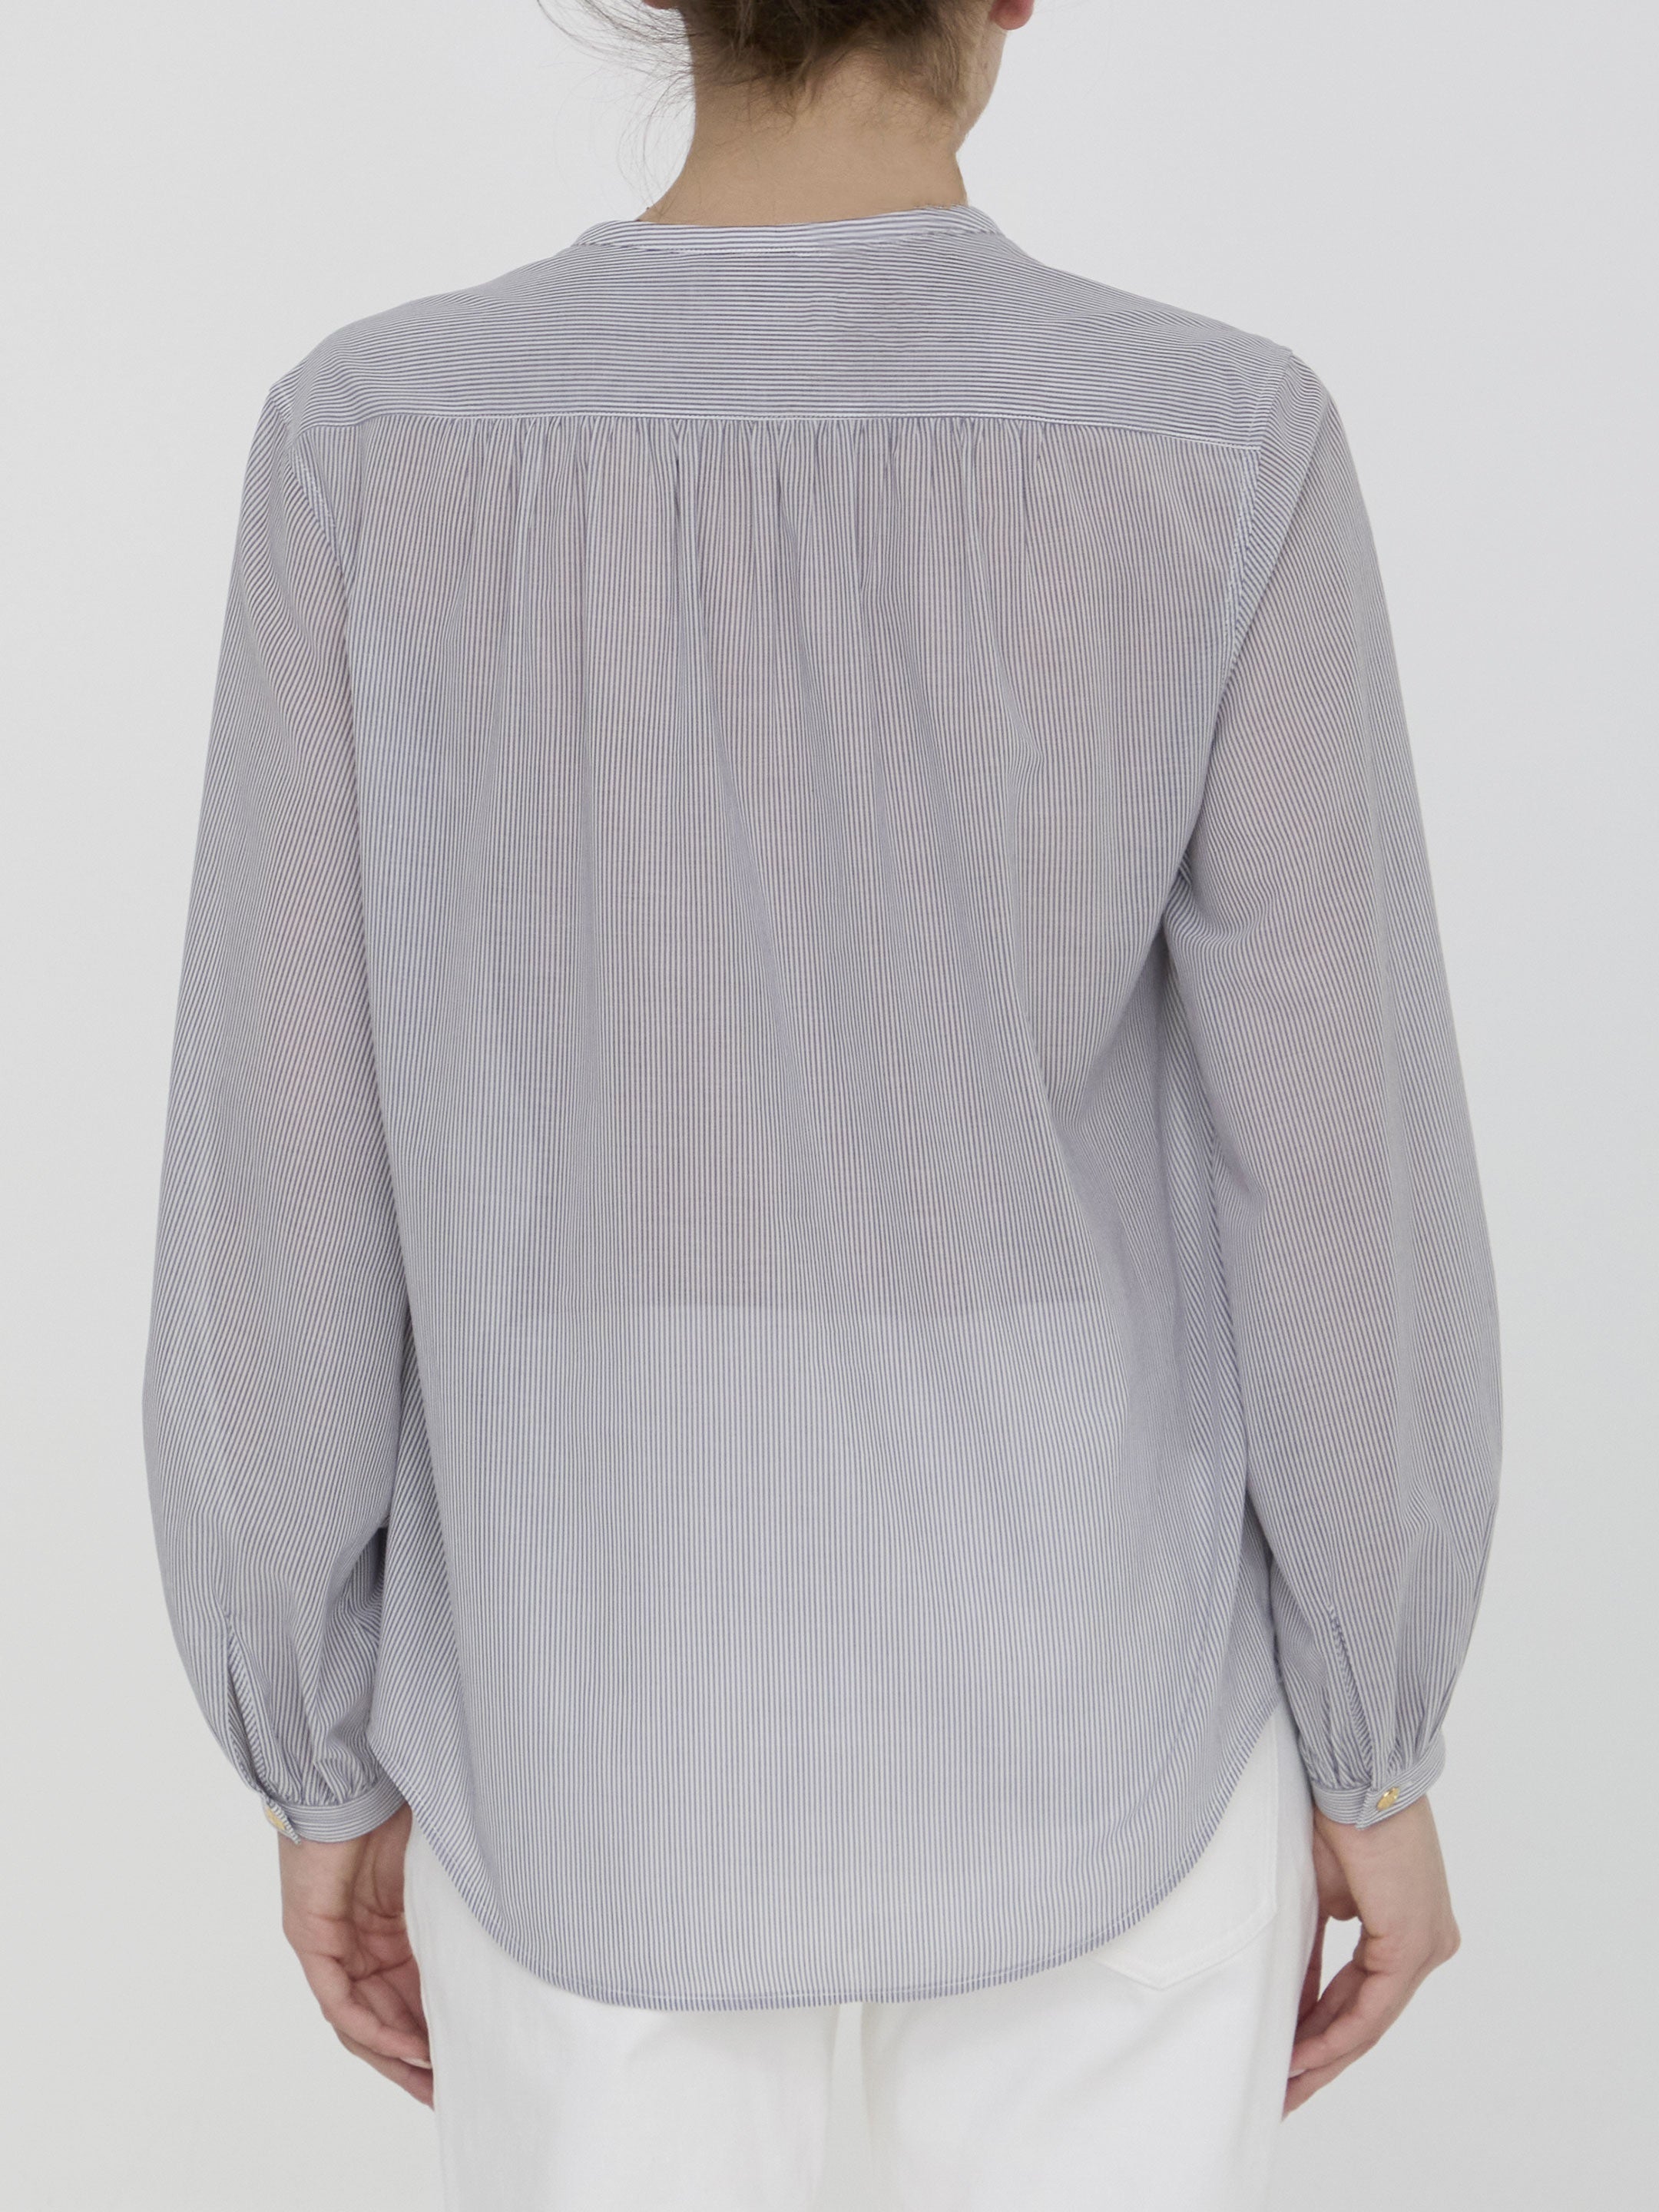 CELINE-OUTLET-SALE-Romy-blouse-Blusen-ARCHIVE-COLLECTION-4.jpg